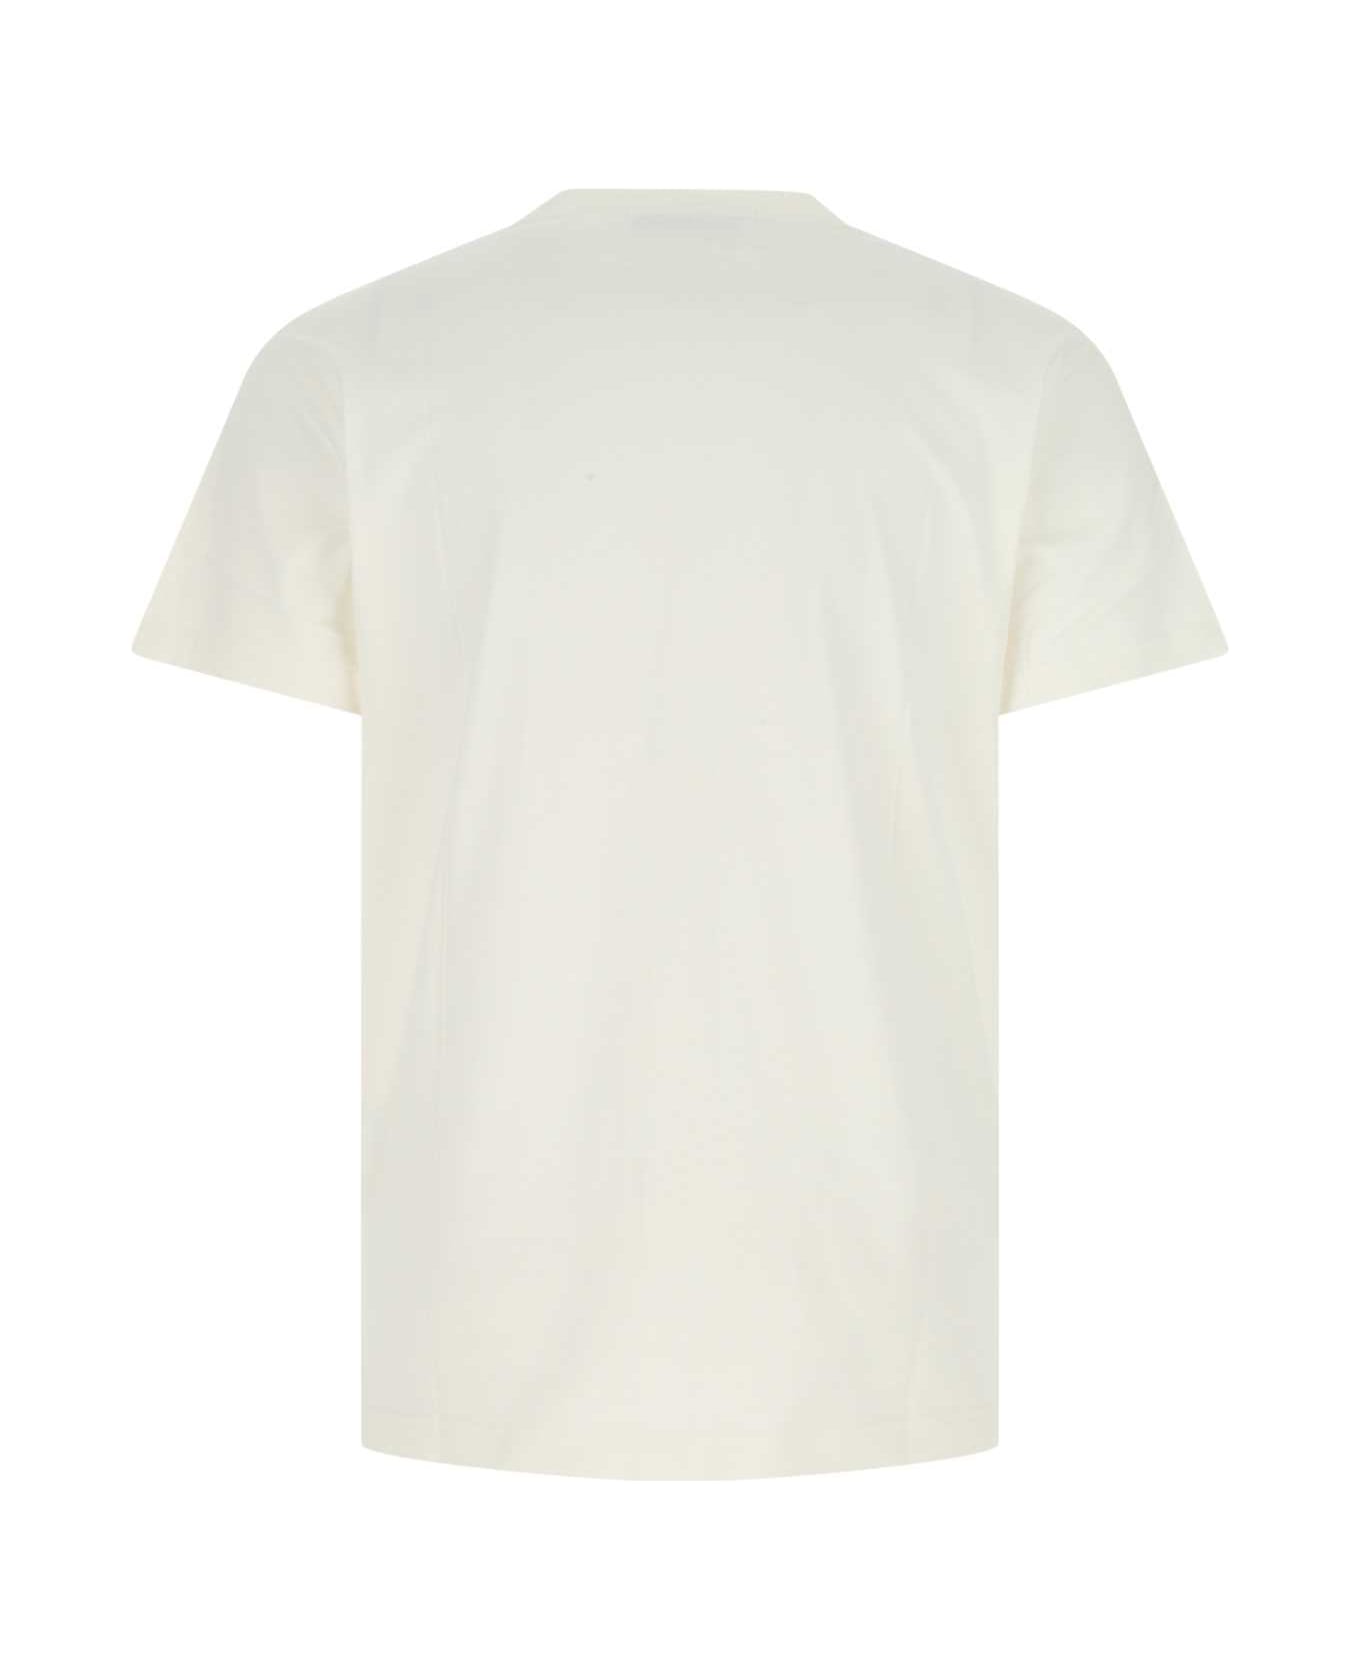 AMBUSH Ivory Cotton T-shirt Set - 0210